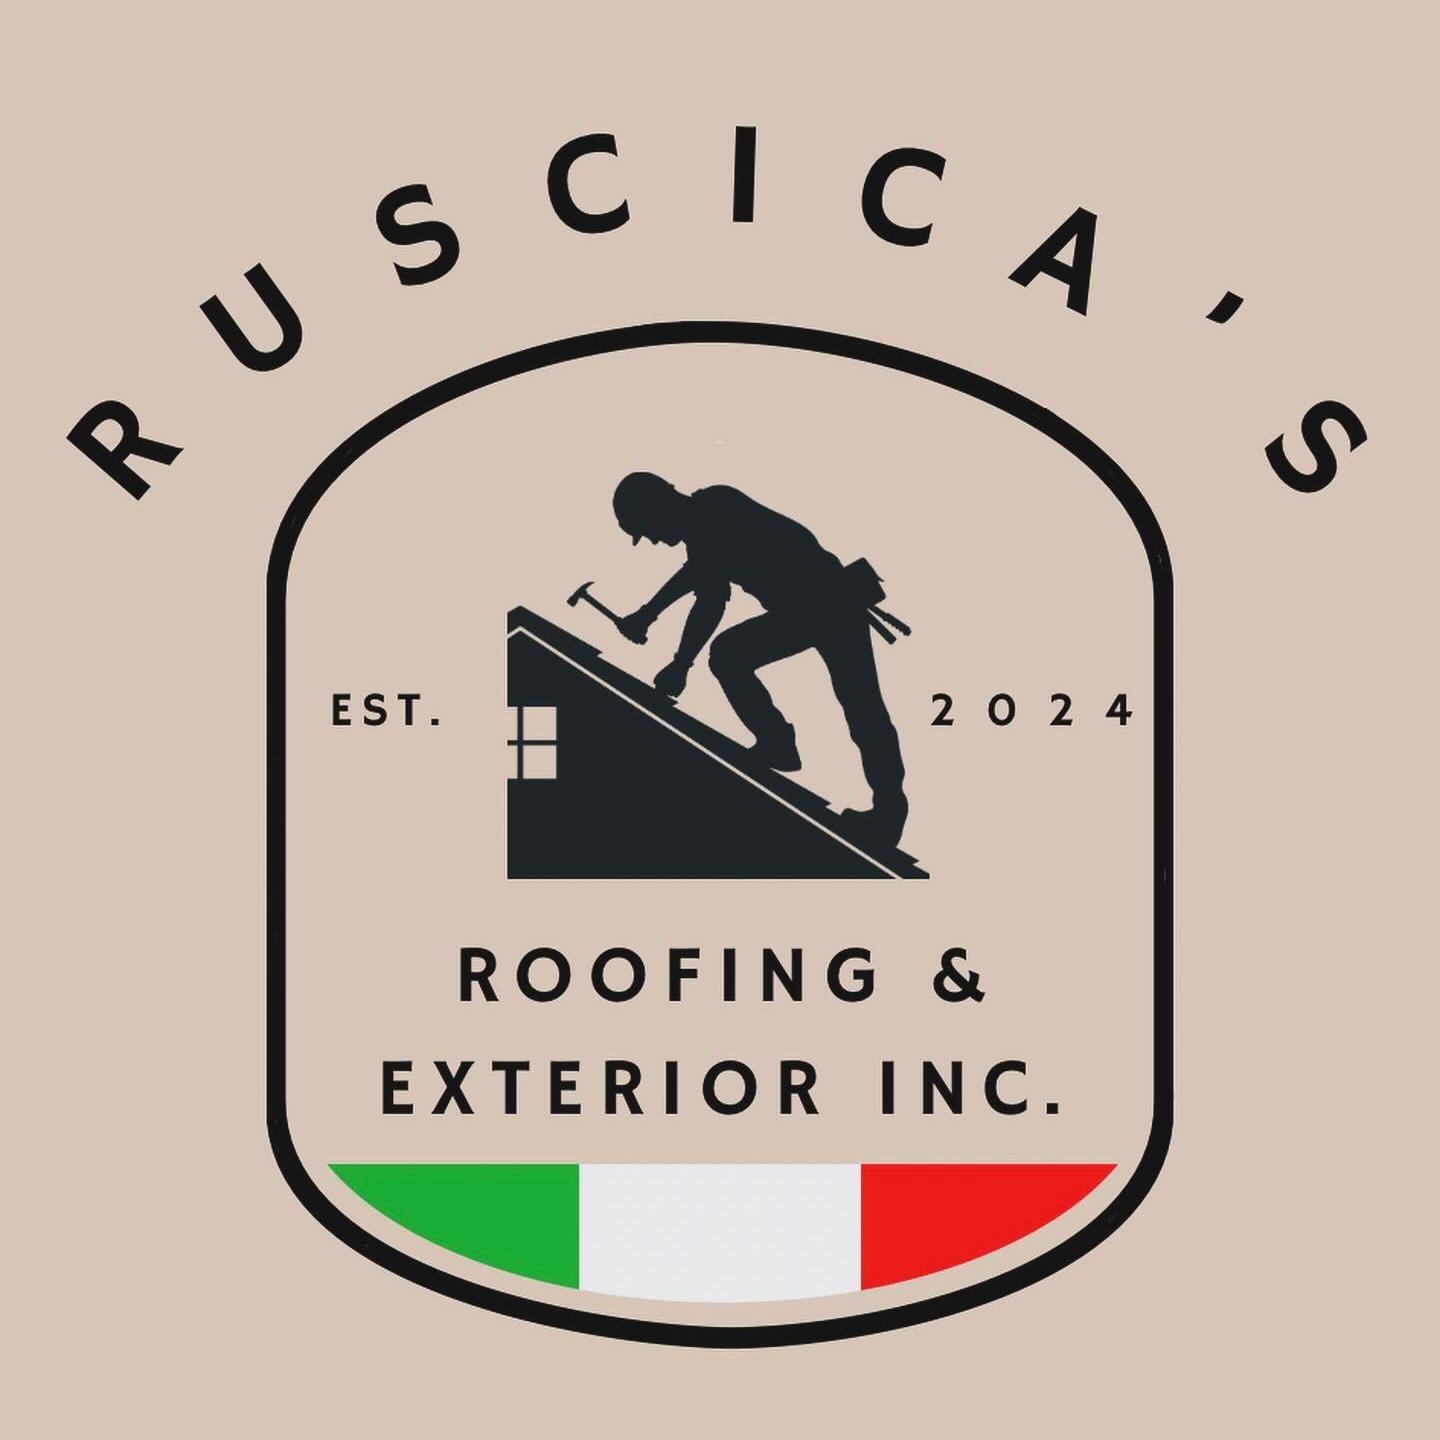 Ruscica’s Roofing & Repairs's logo